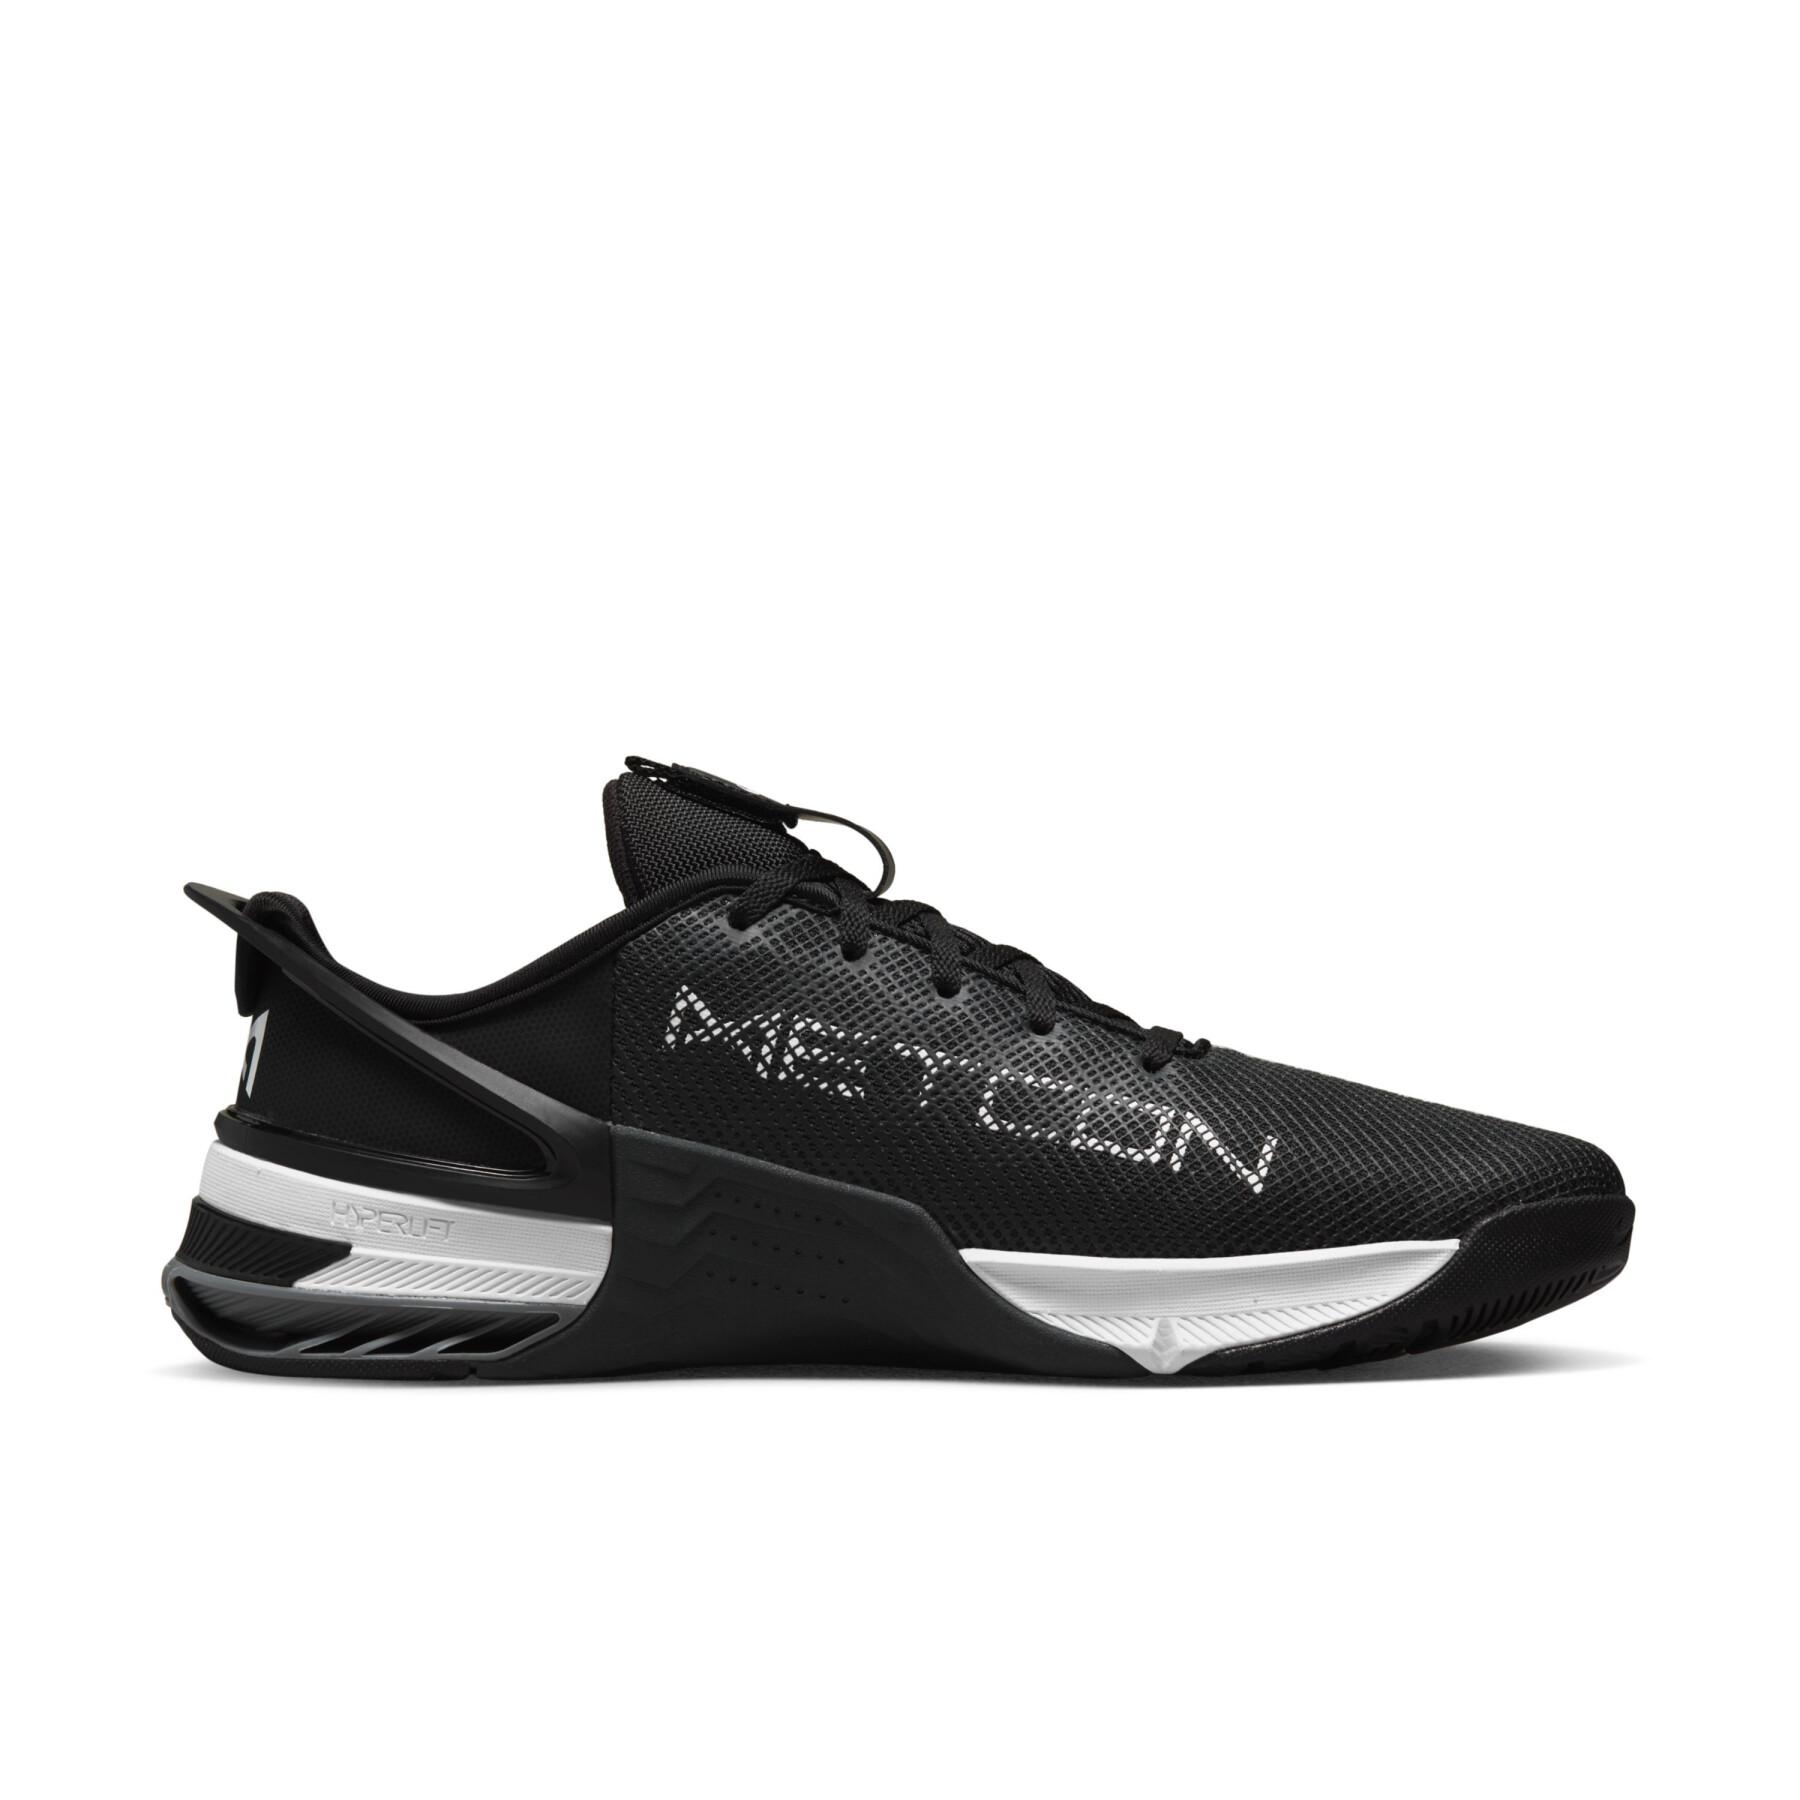 Cross training shoes Nike Metcon 8 FlyEase